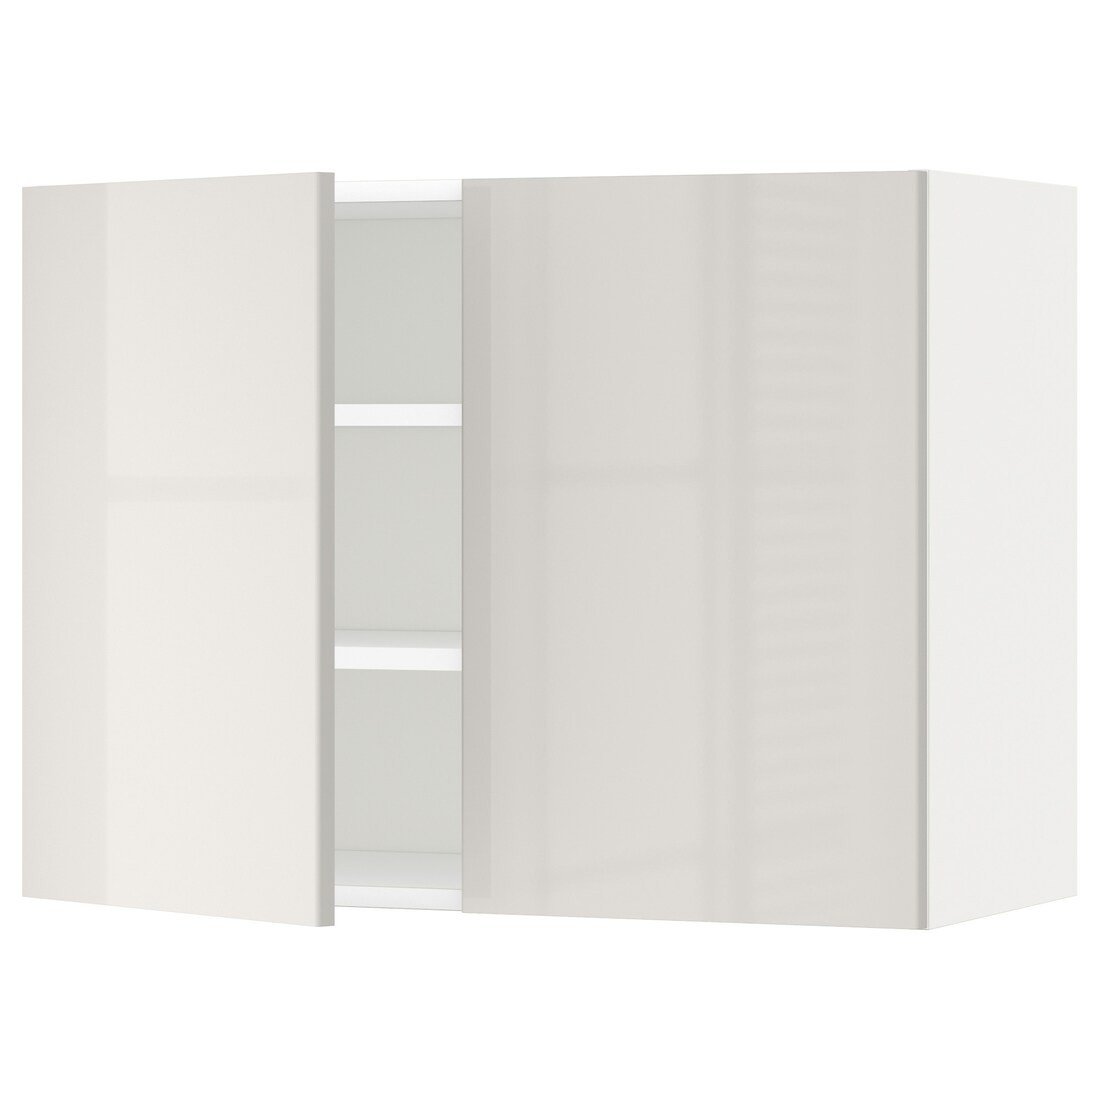 METOD МЕТОД Навесной шкаф с полками / 2 дверцы, белый / Ringhult светло-серый, 80x60 см